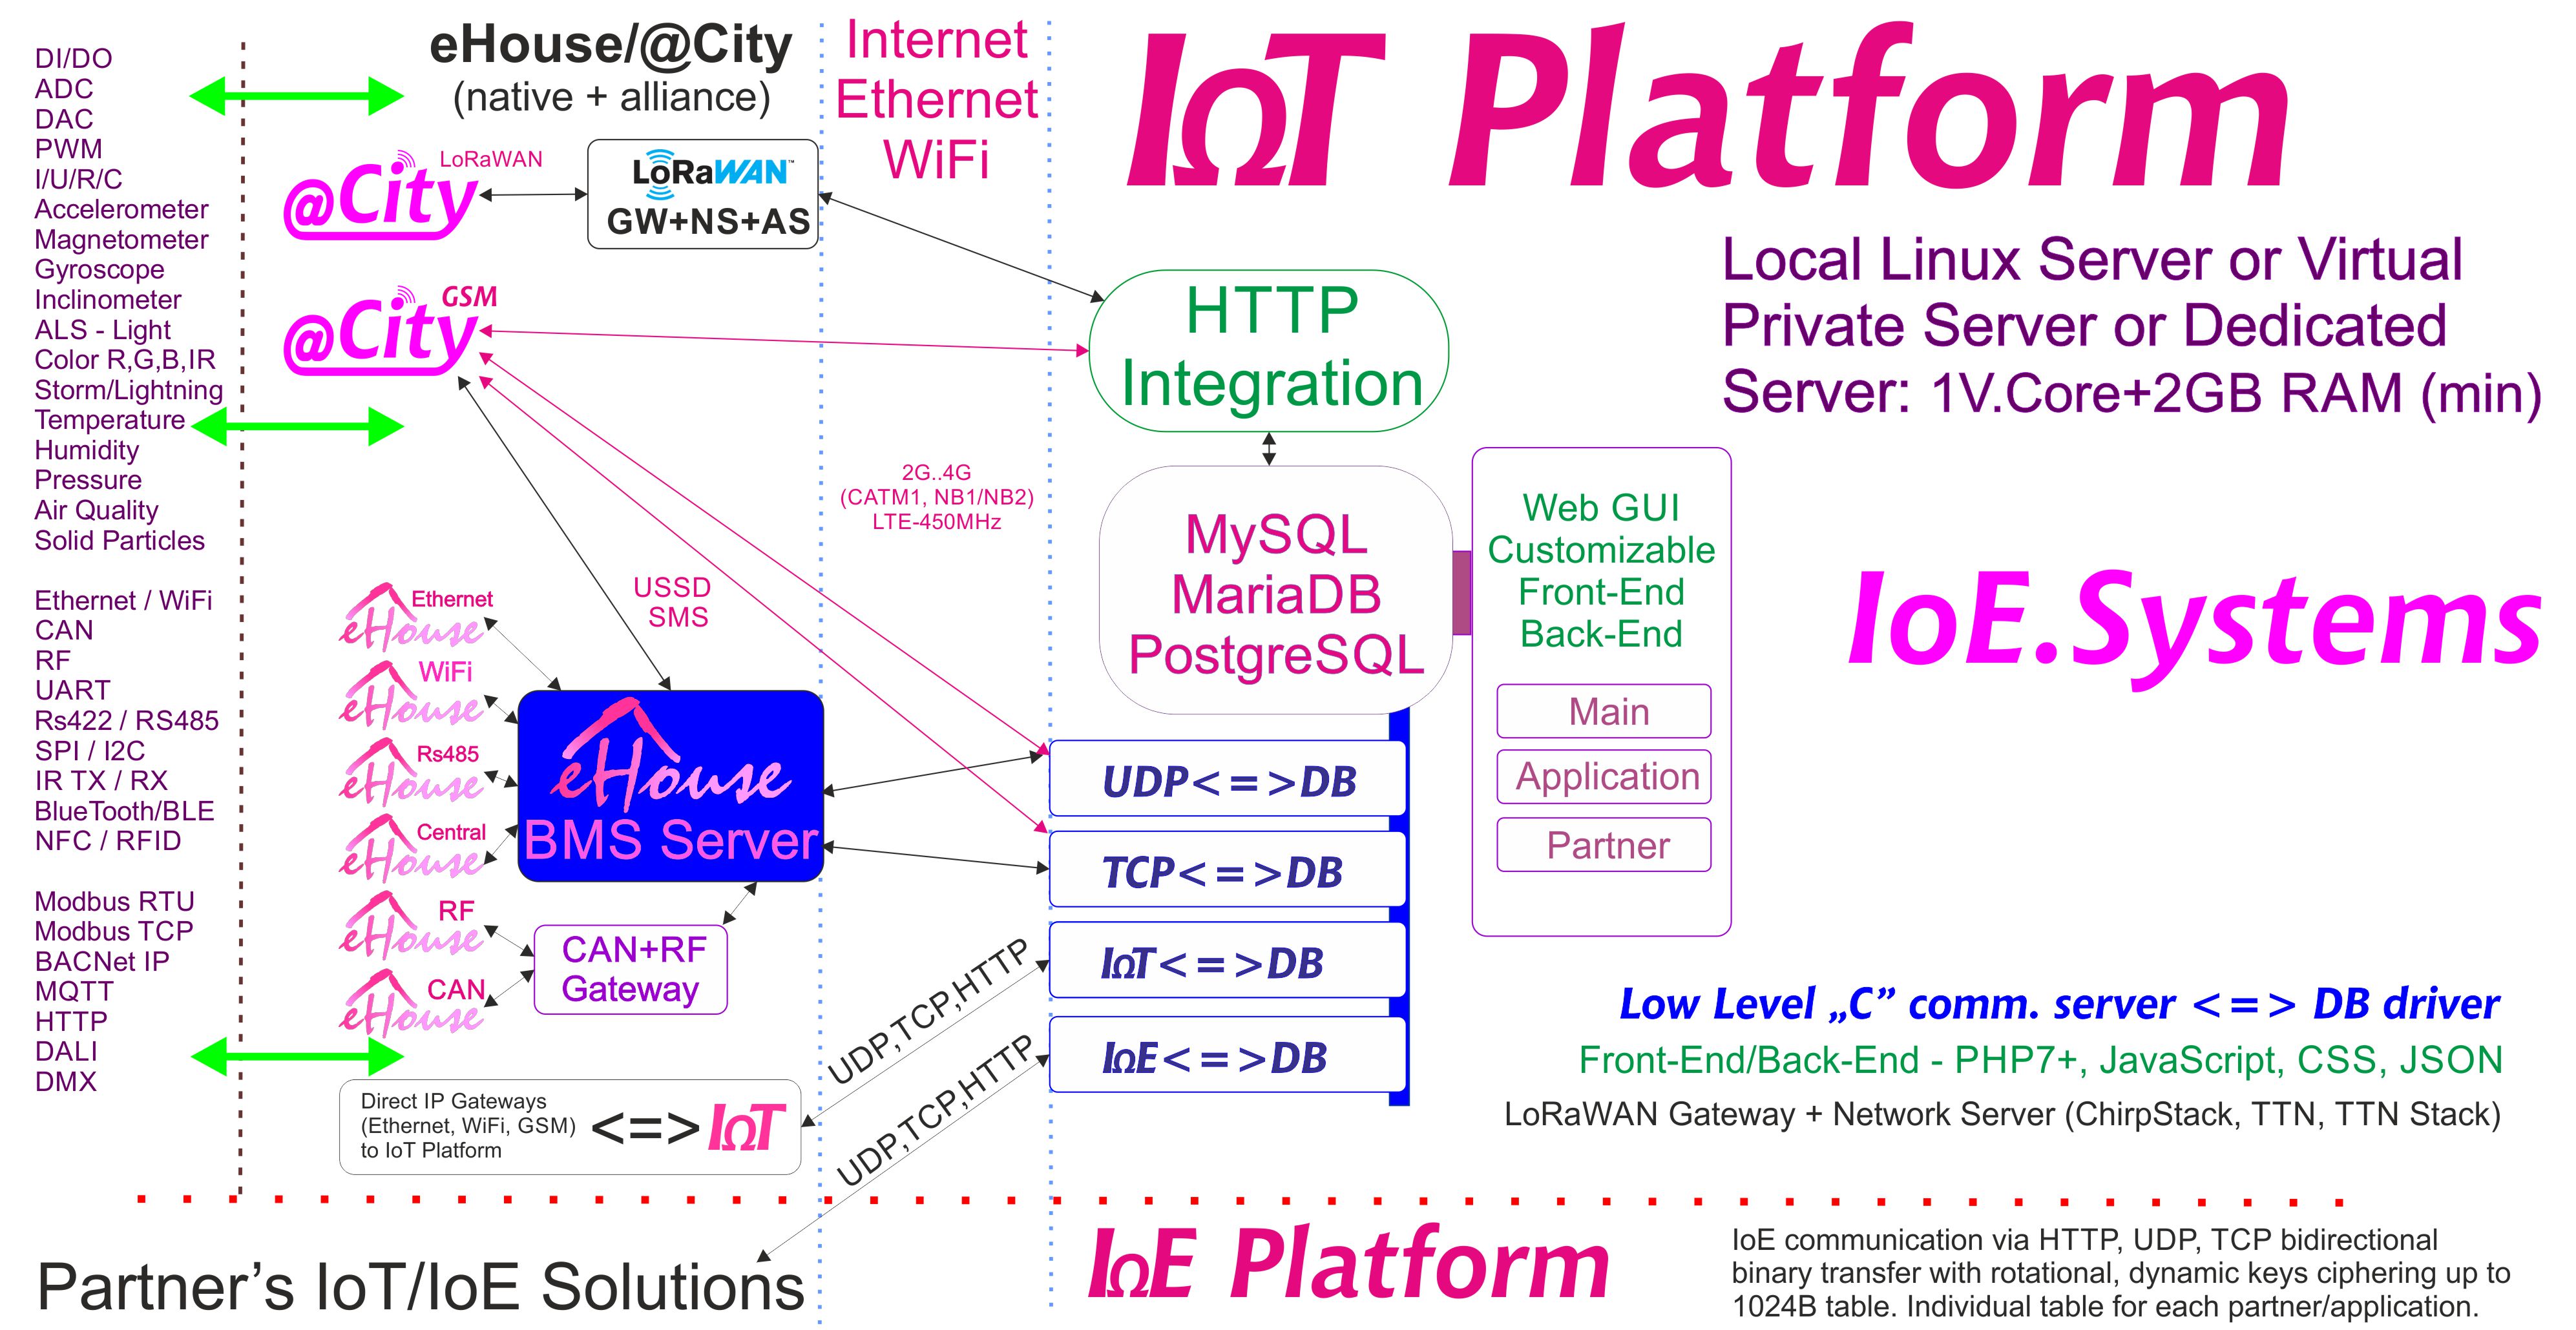 eHouse, eCity Server Software BAS, BMS, IoE, IoT Systems le Platform